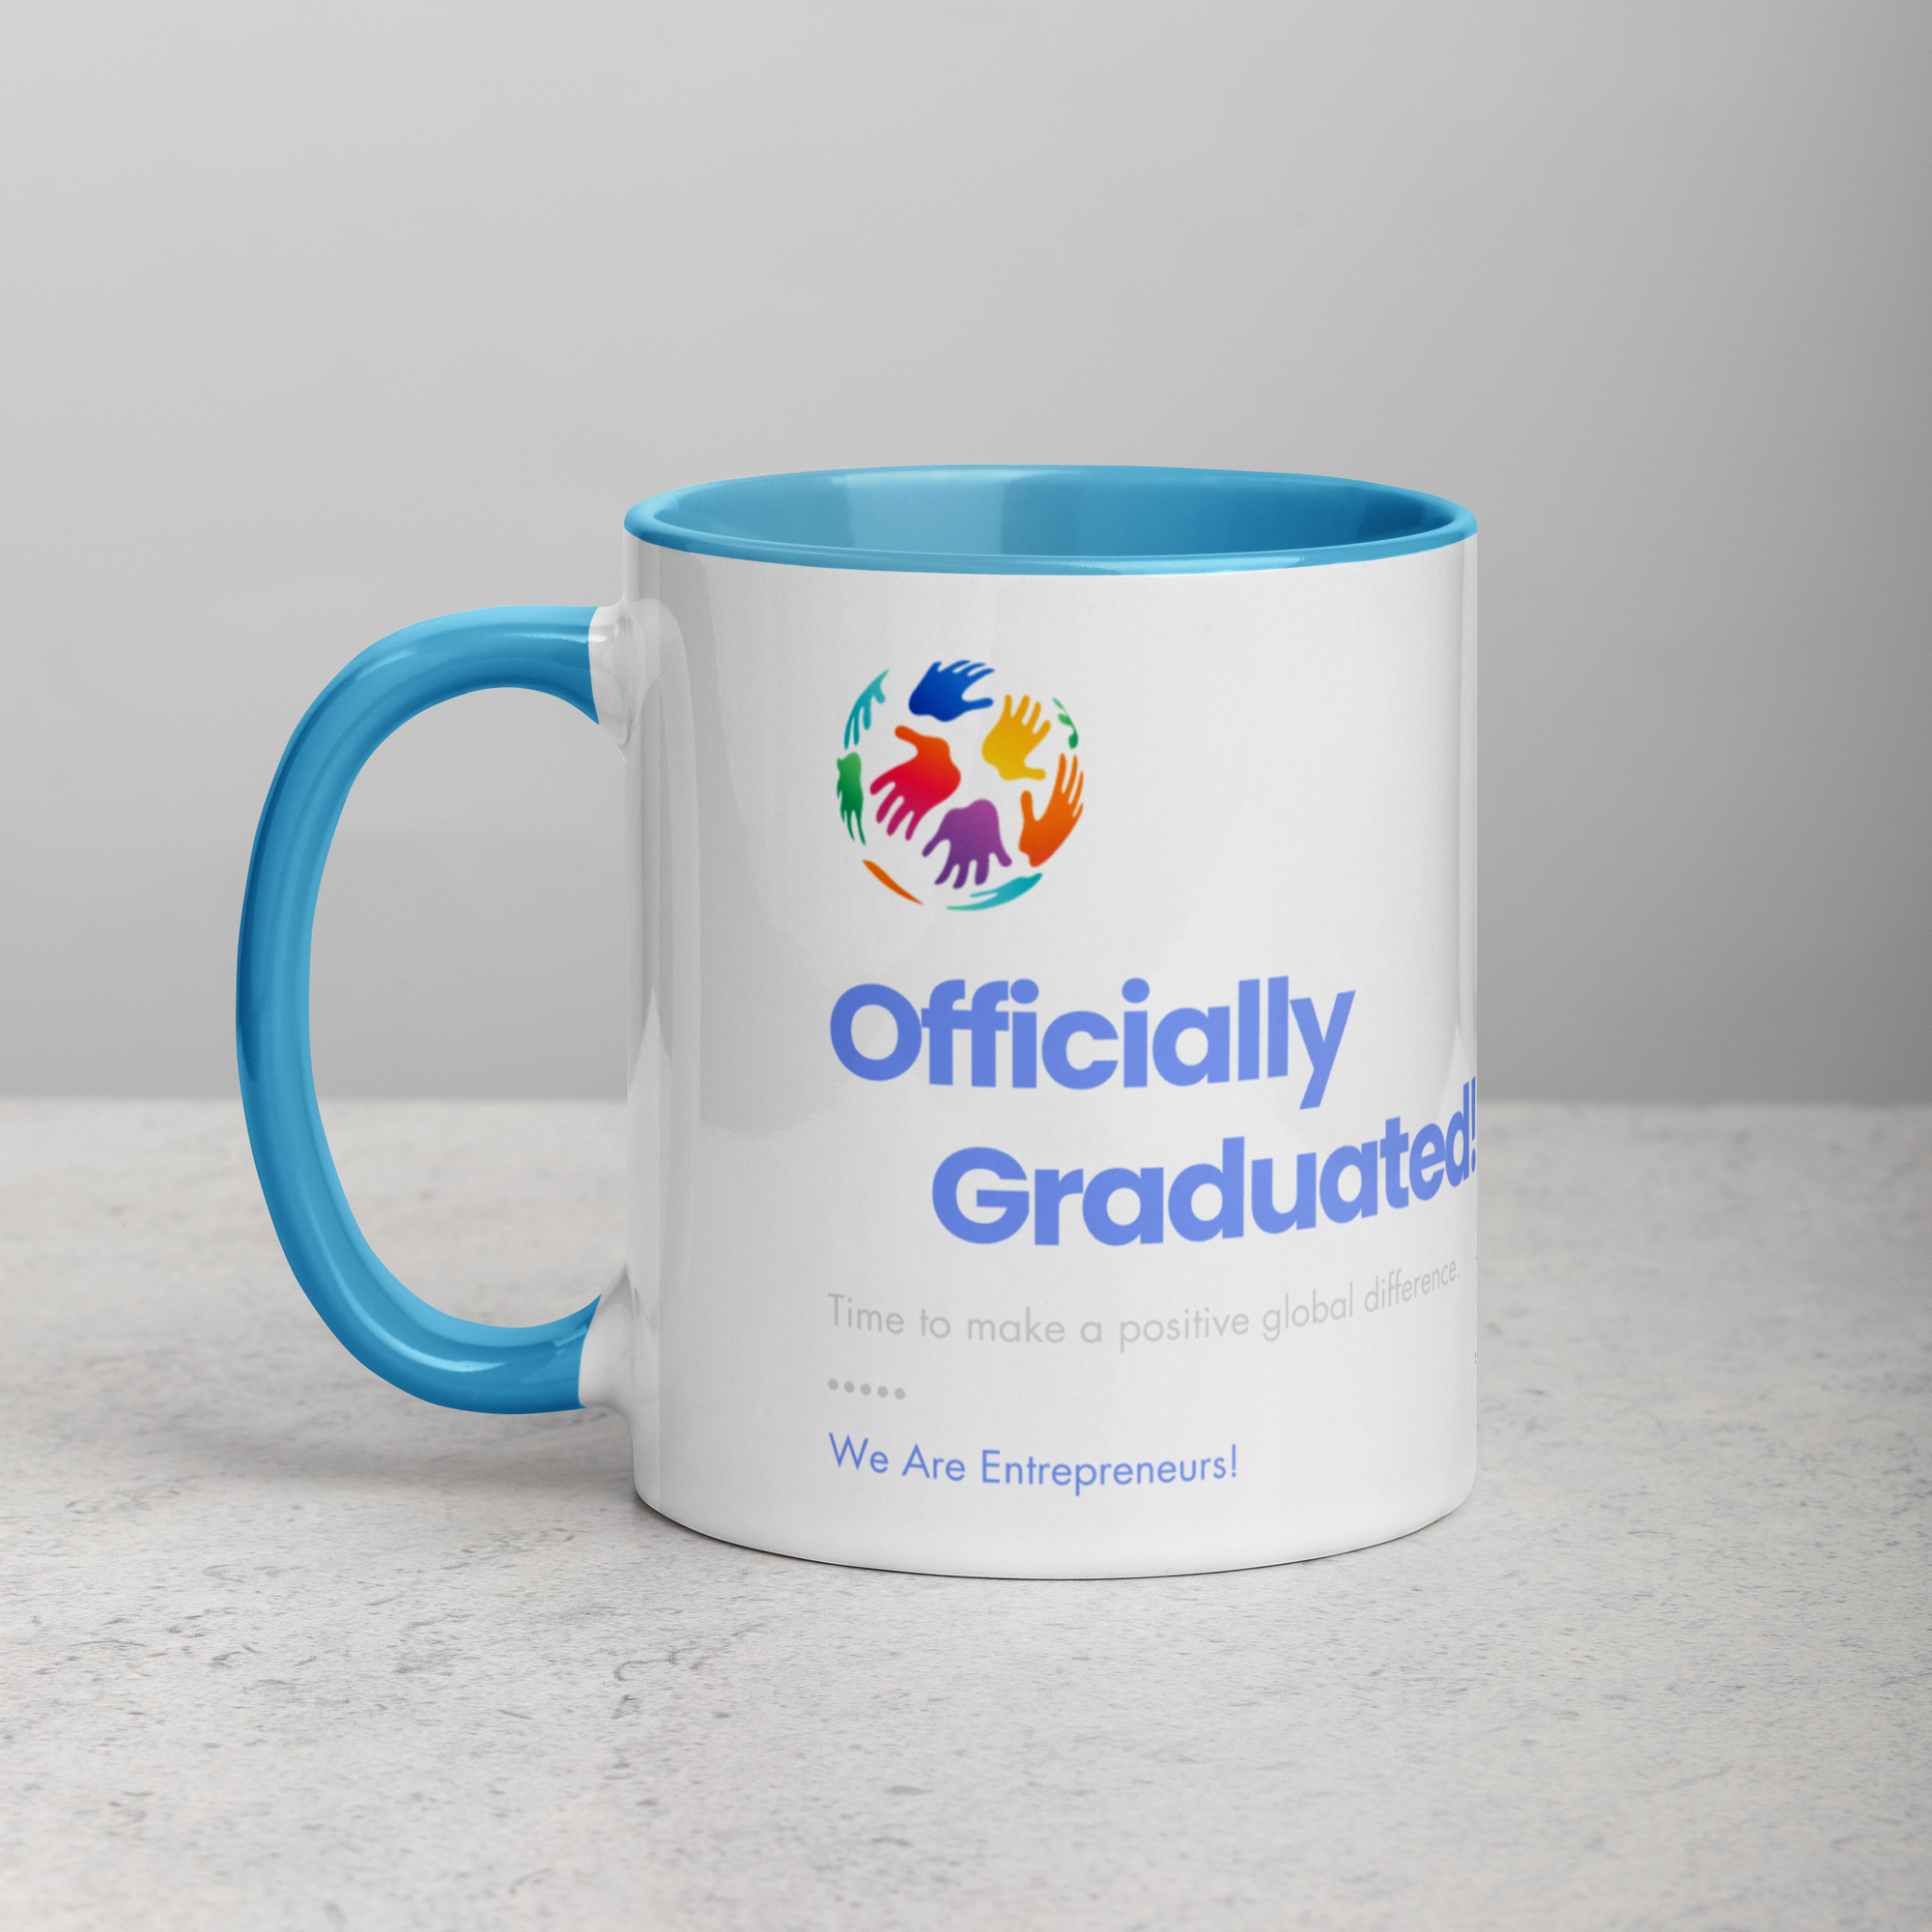 "We Are Entrepreneurs" Graduate Mug